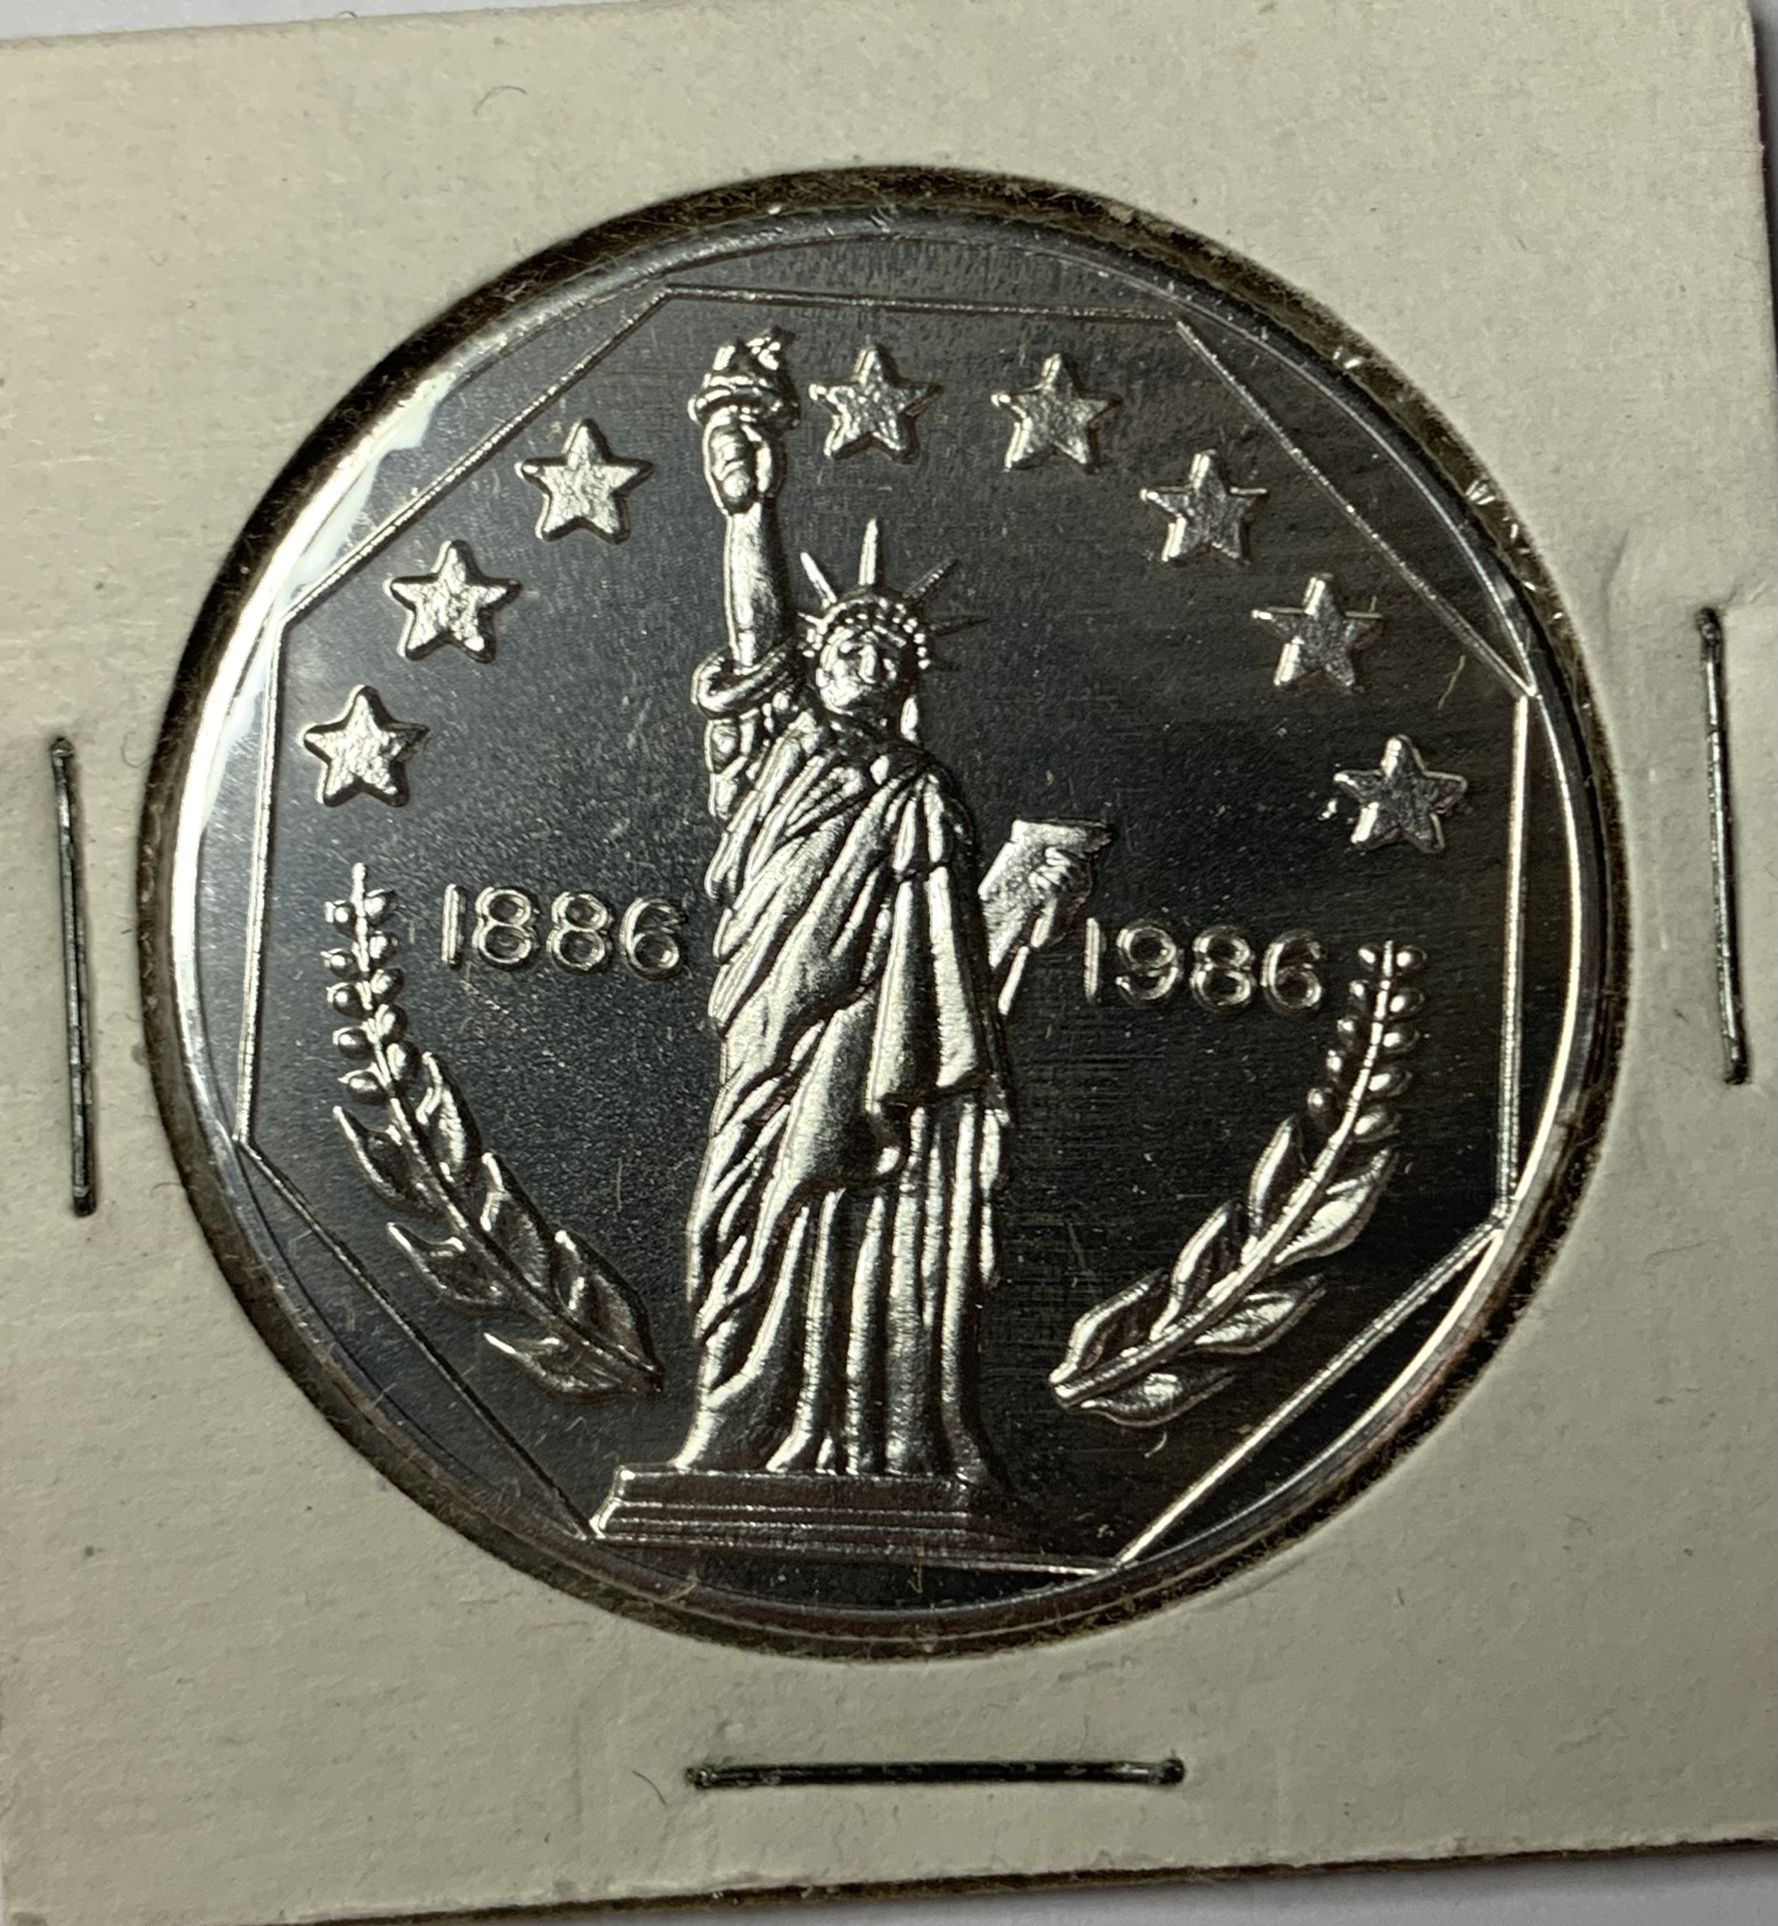 1 SILVER OUNCE STATUE OF LIBERTY CENTENNIAL DATED 1886-96 COIN